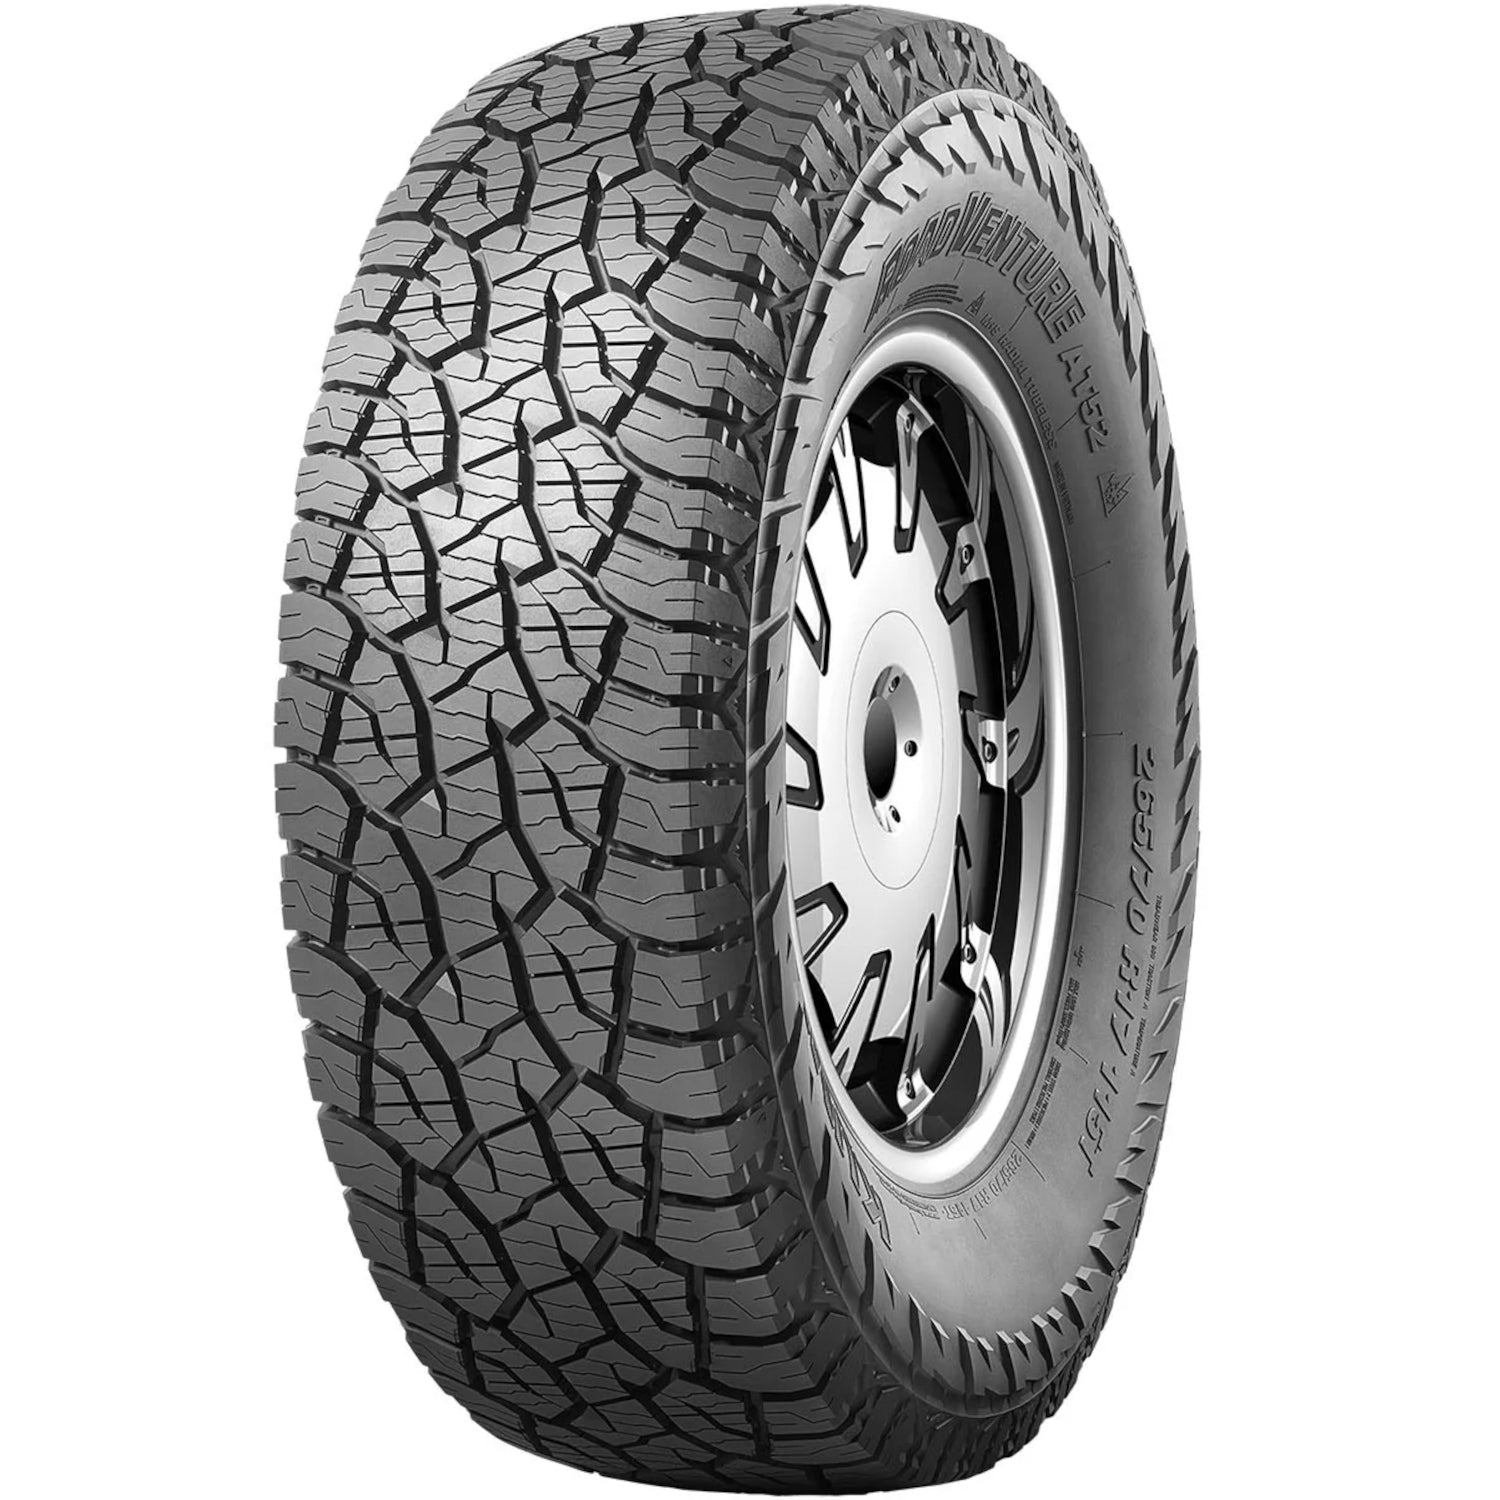 KUMHO ROAD VENTURE AT52 265/75R16 (31.7X10.4R 16) Tires